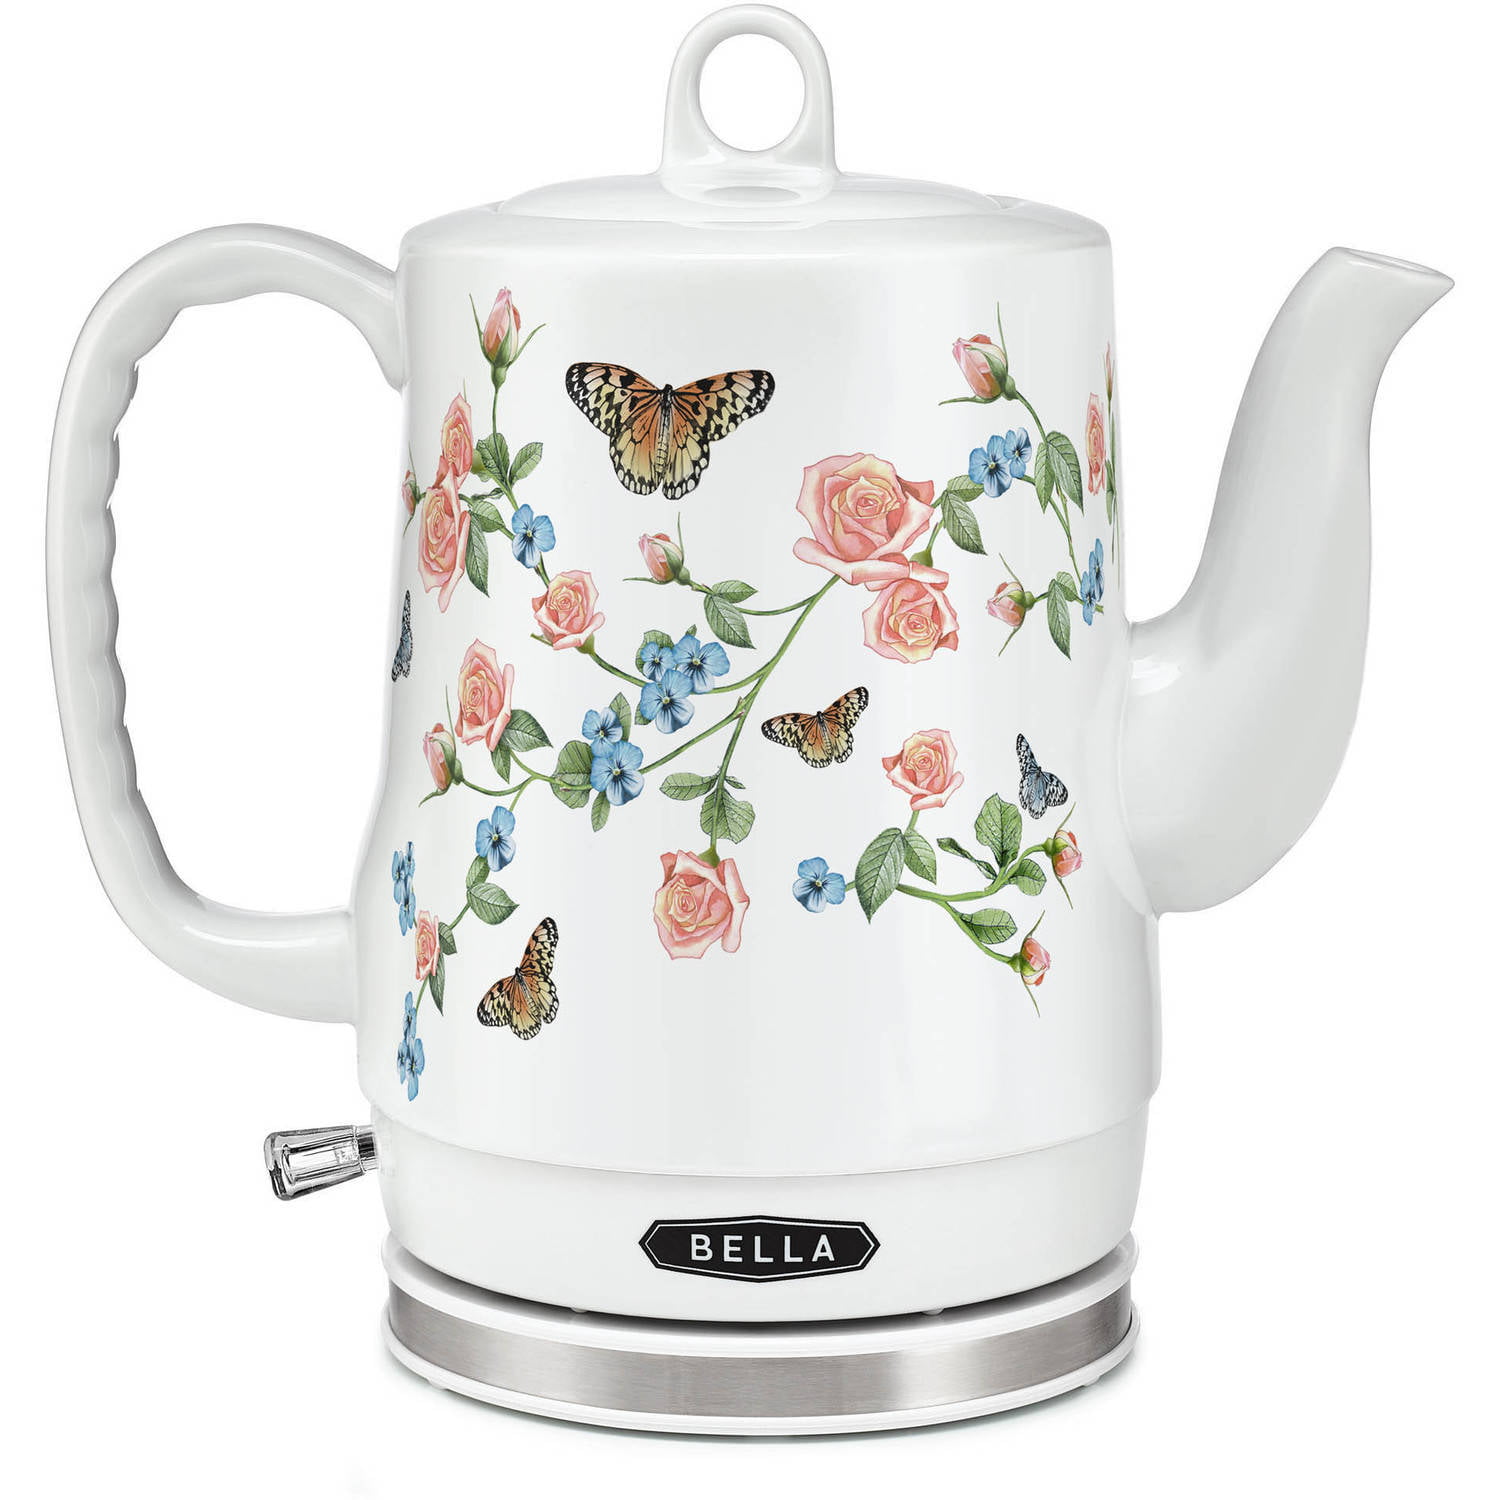 Bella Electric Ceramic Kettle New Tea Pot Teapot Handle 1.2L White & Silver 